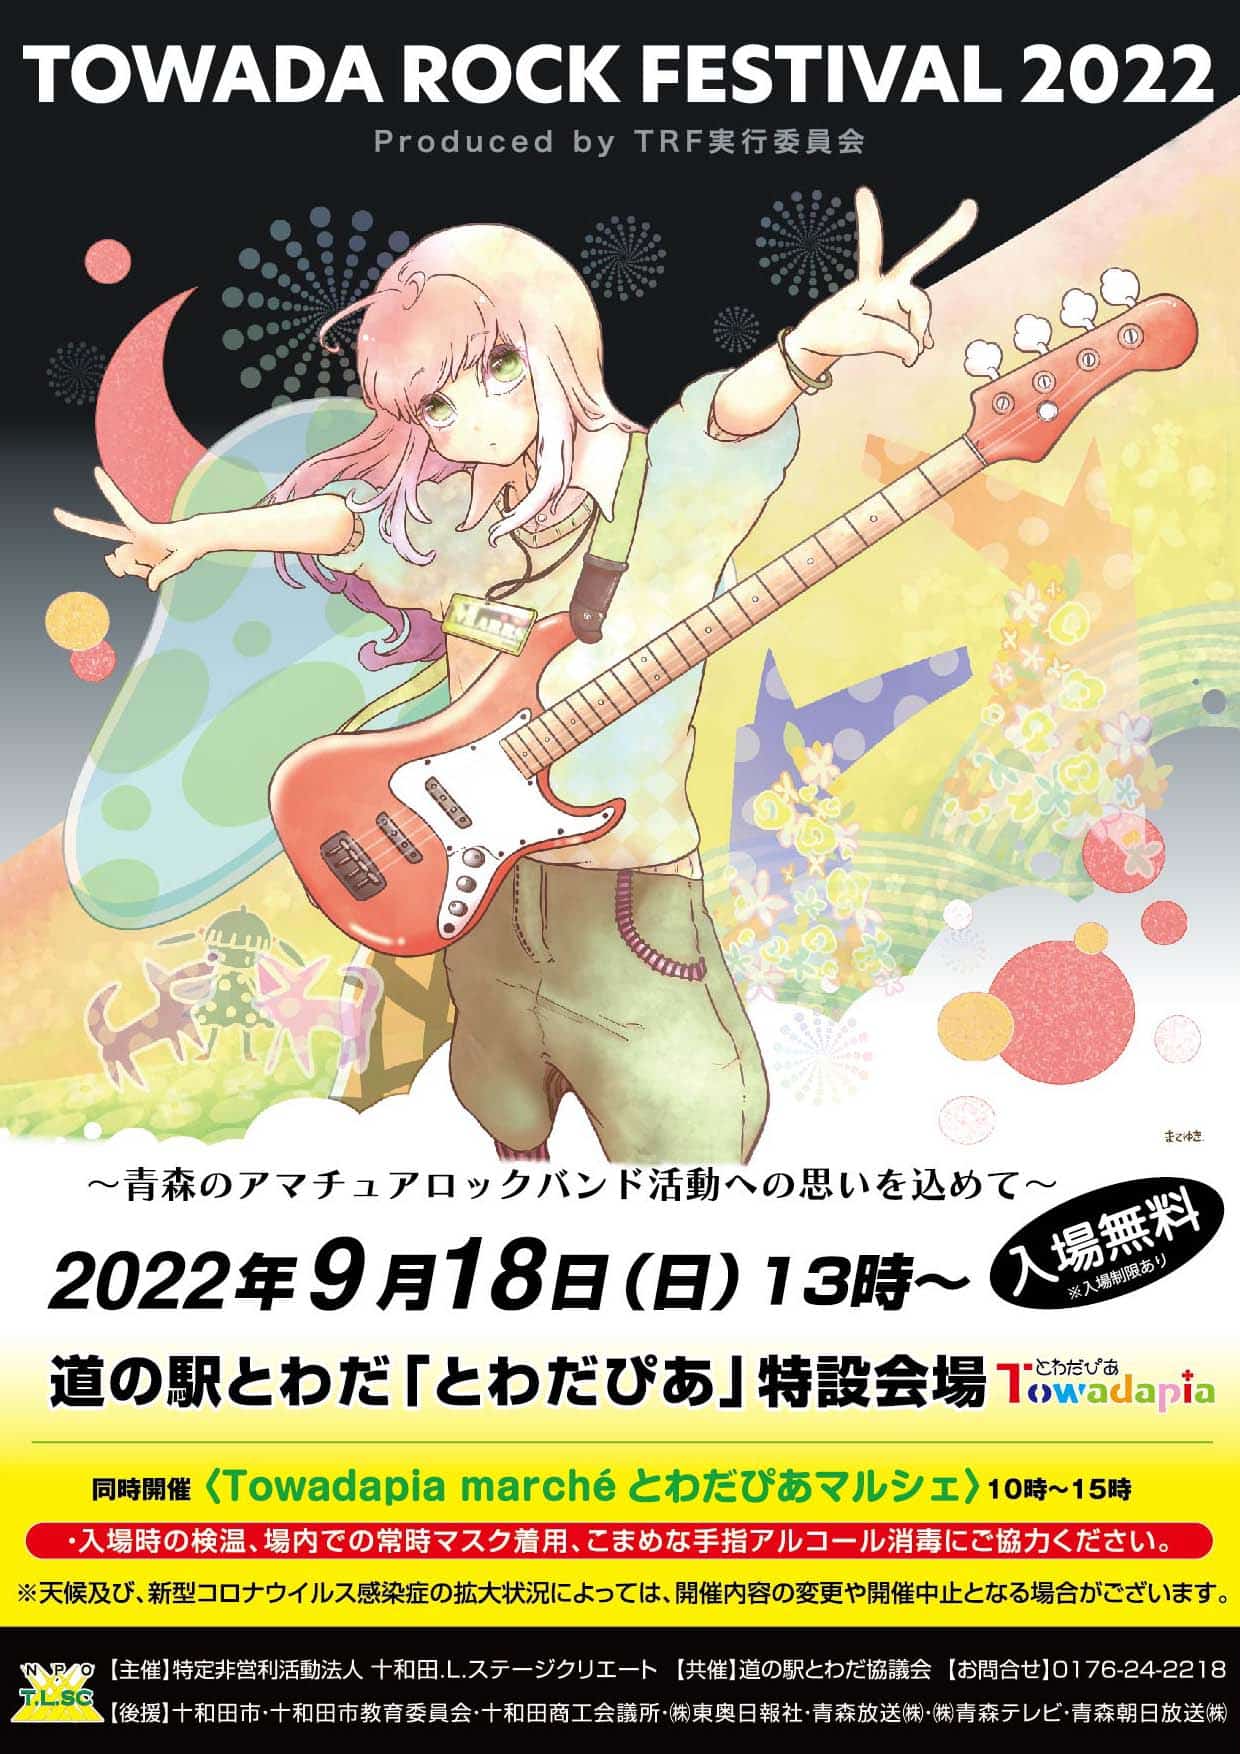 TOWADA ROCK FESTIVAL 2022